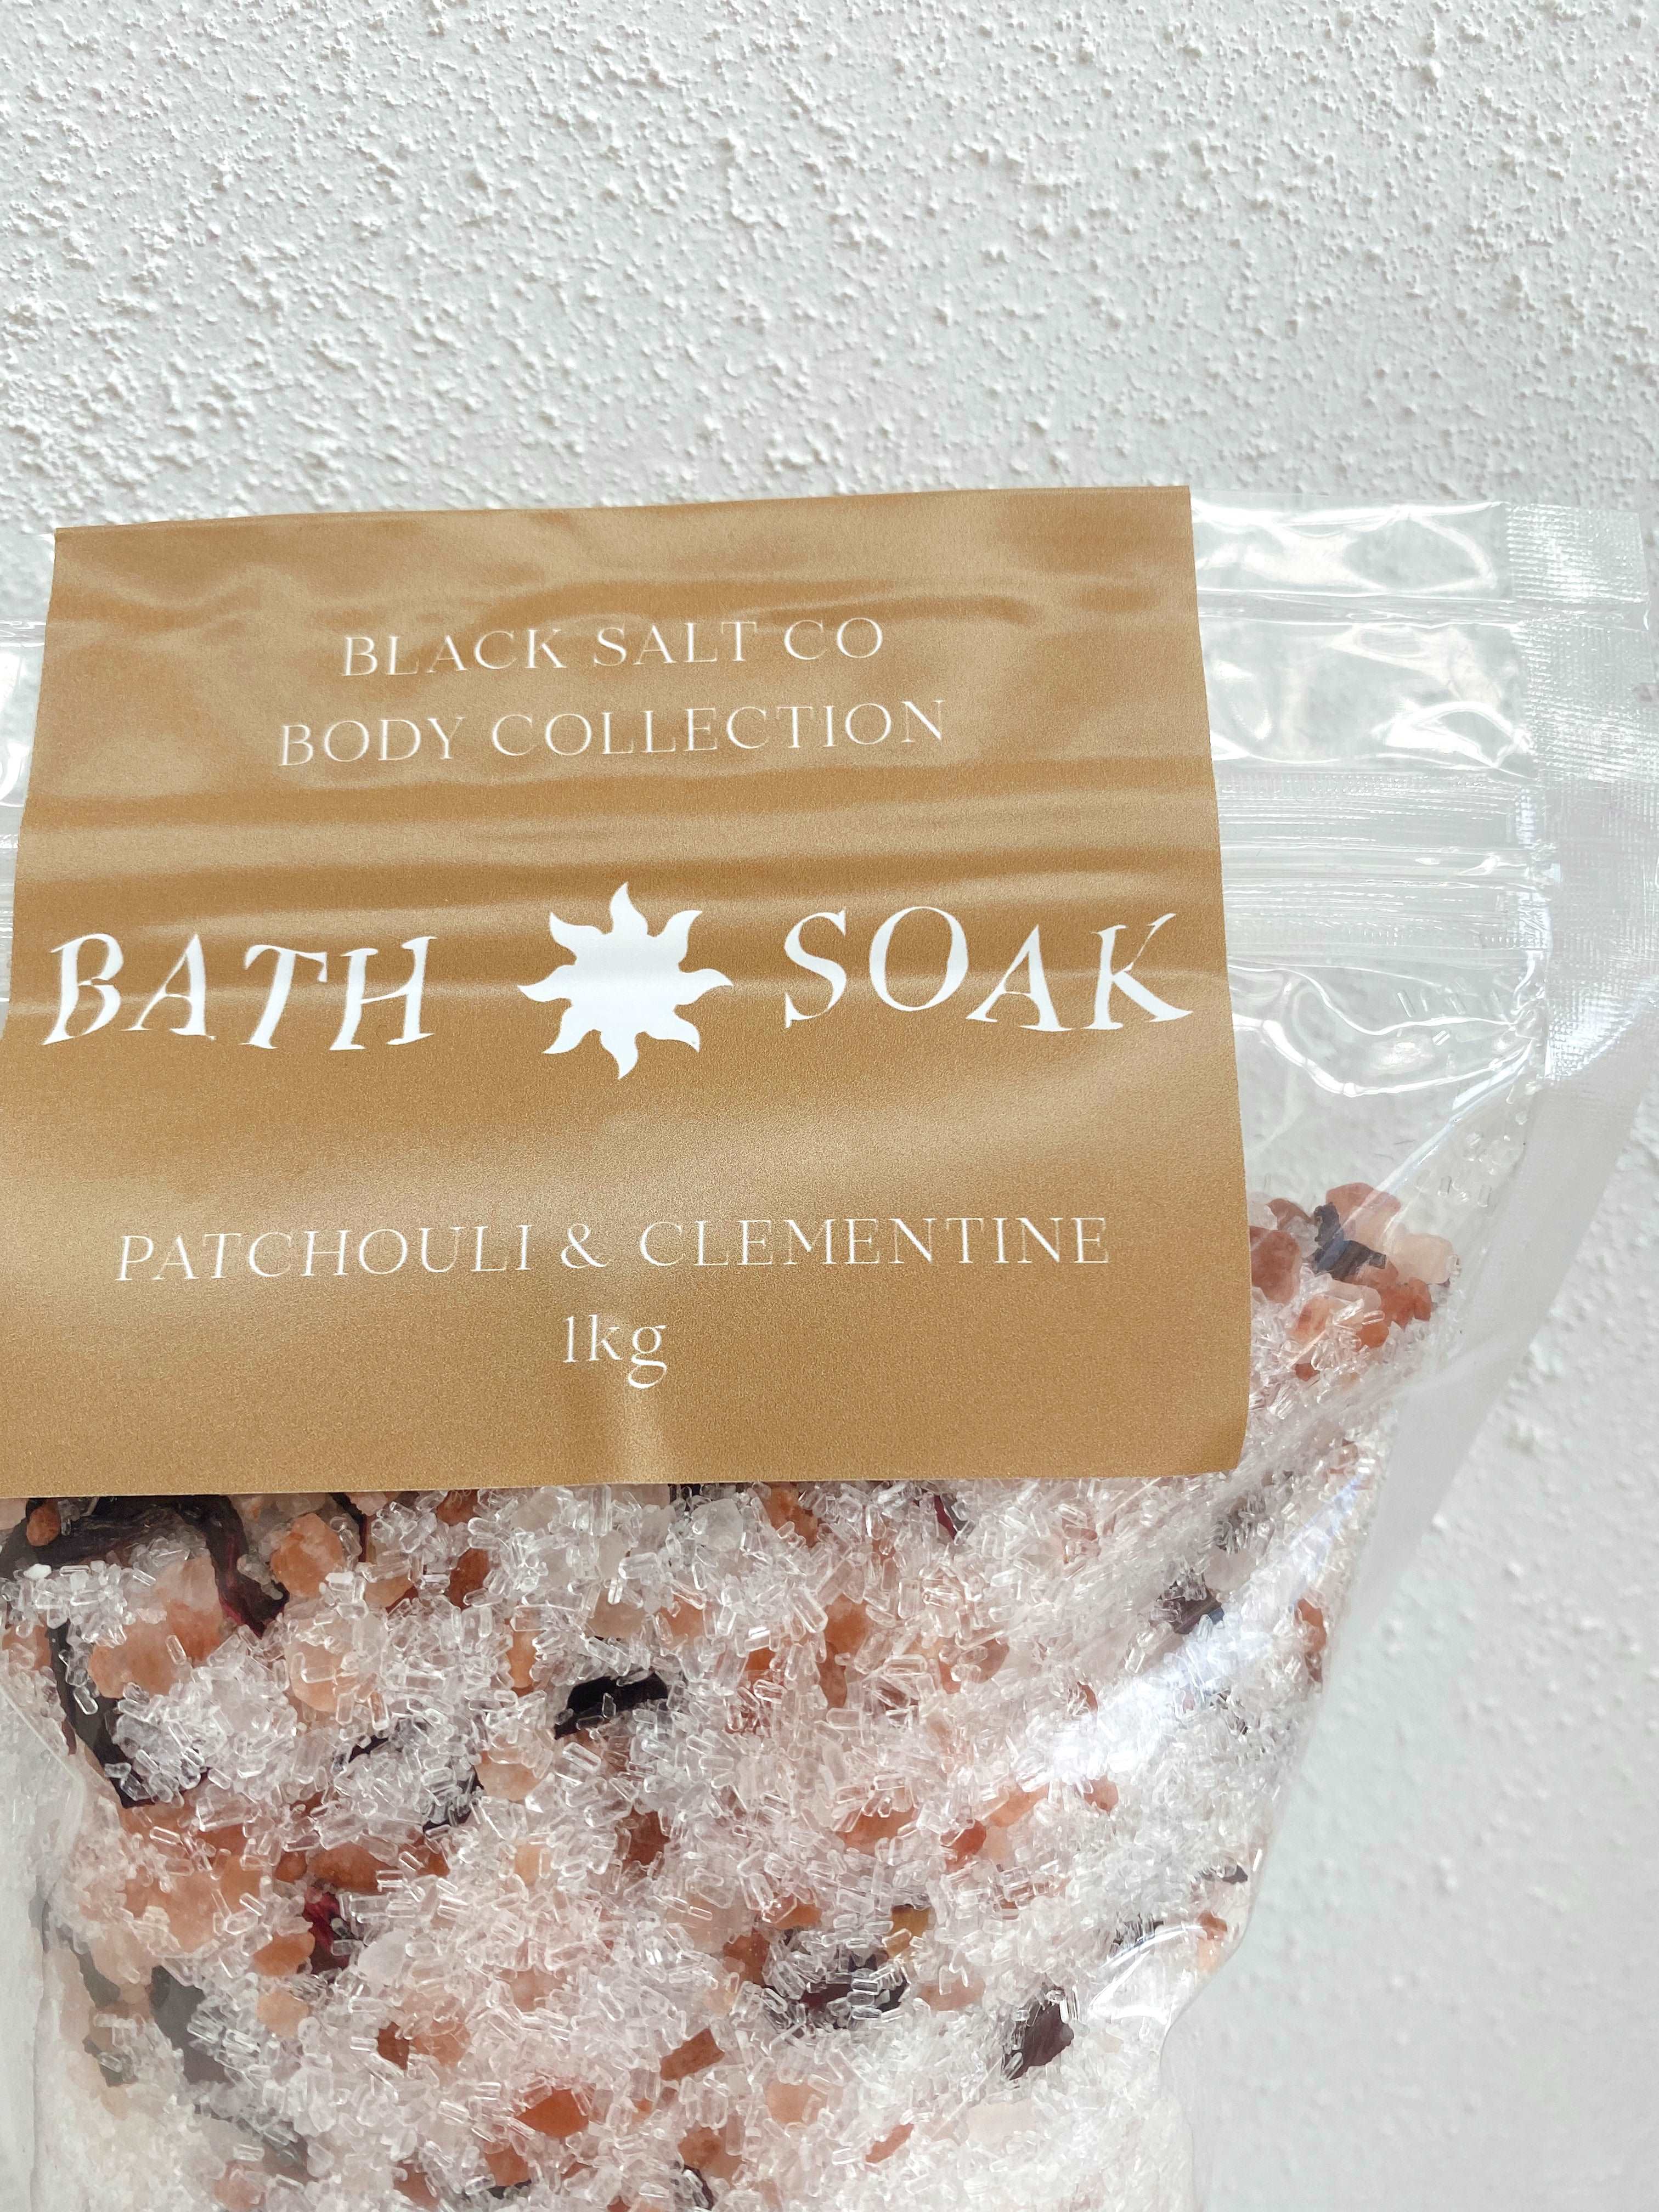 BLACK SALT CO BODY BATH SOAK - Black Salt Co sale - Black Salt Co